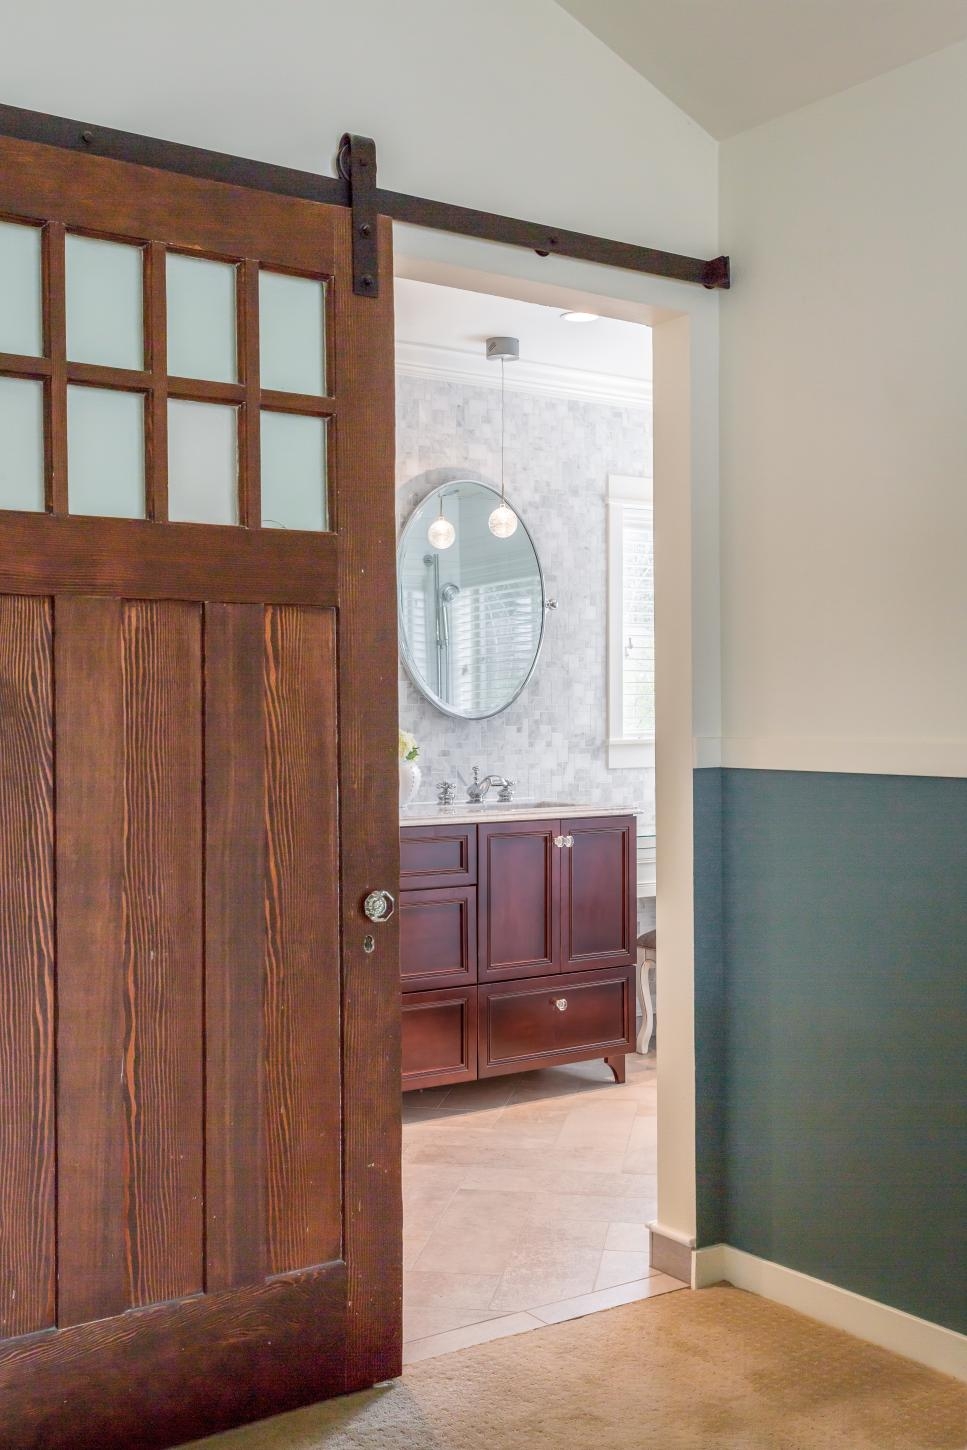 Sliding Barn Door Master Bathroomfloor to ceiling tile creates serene master bathroom harmony